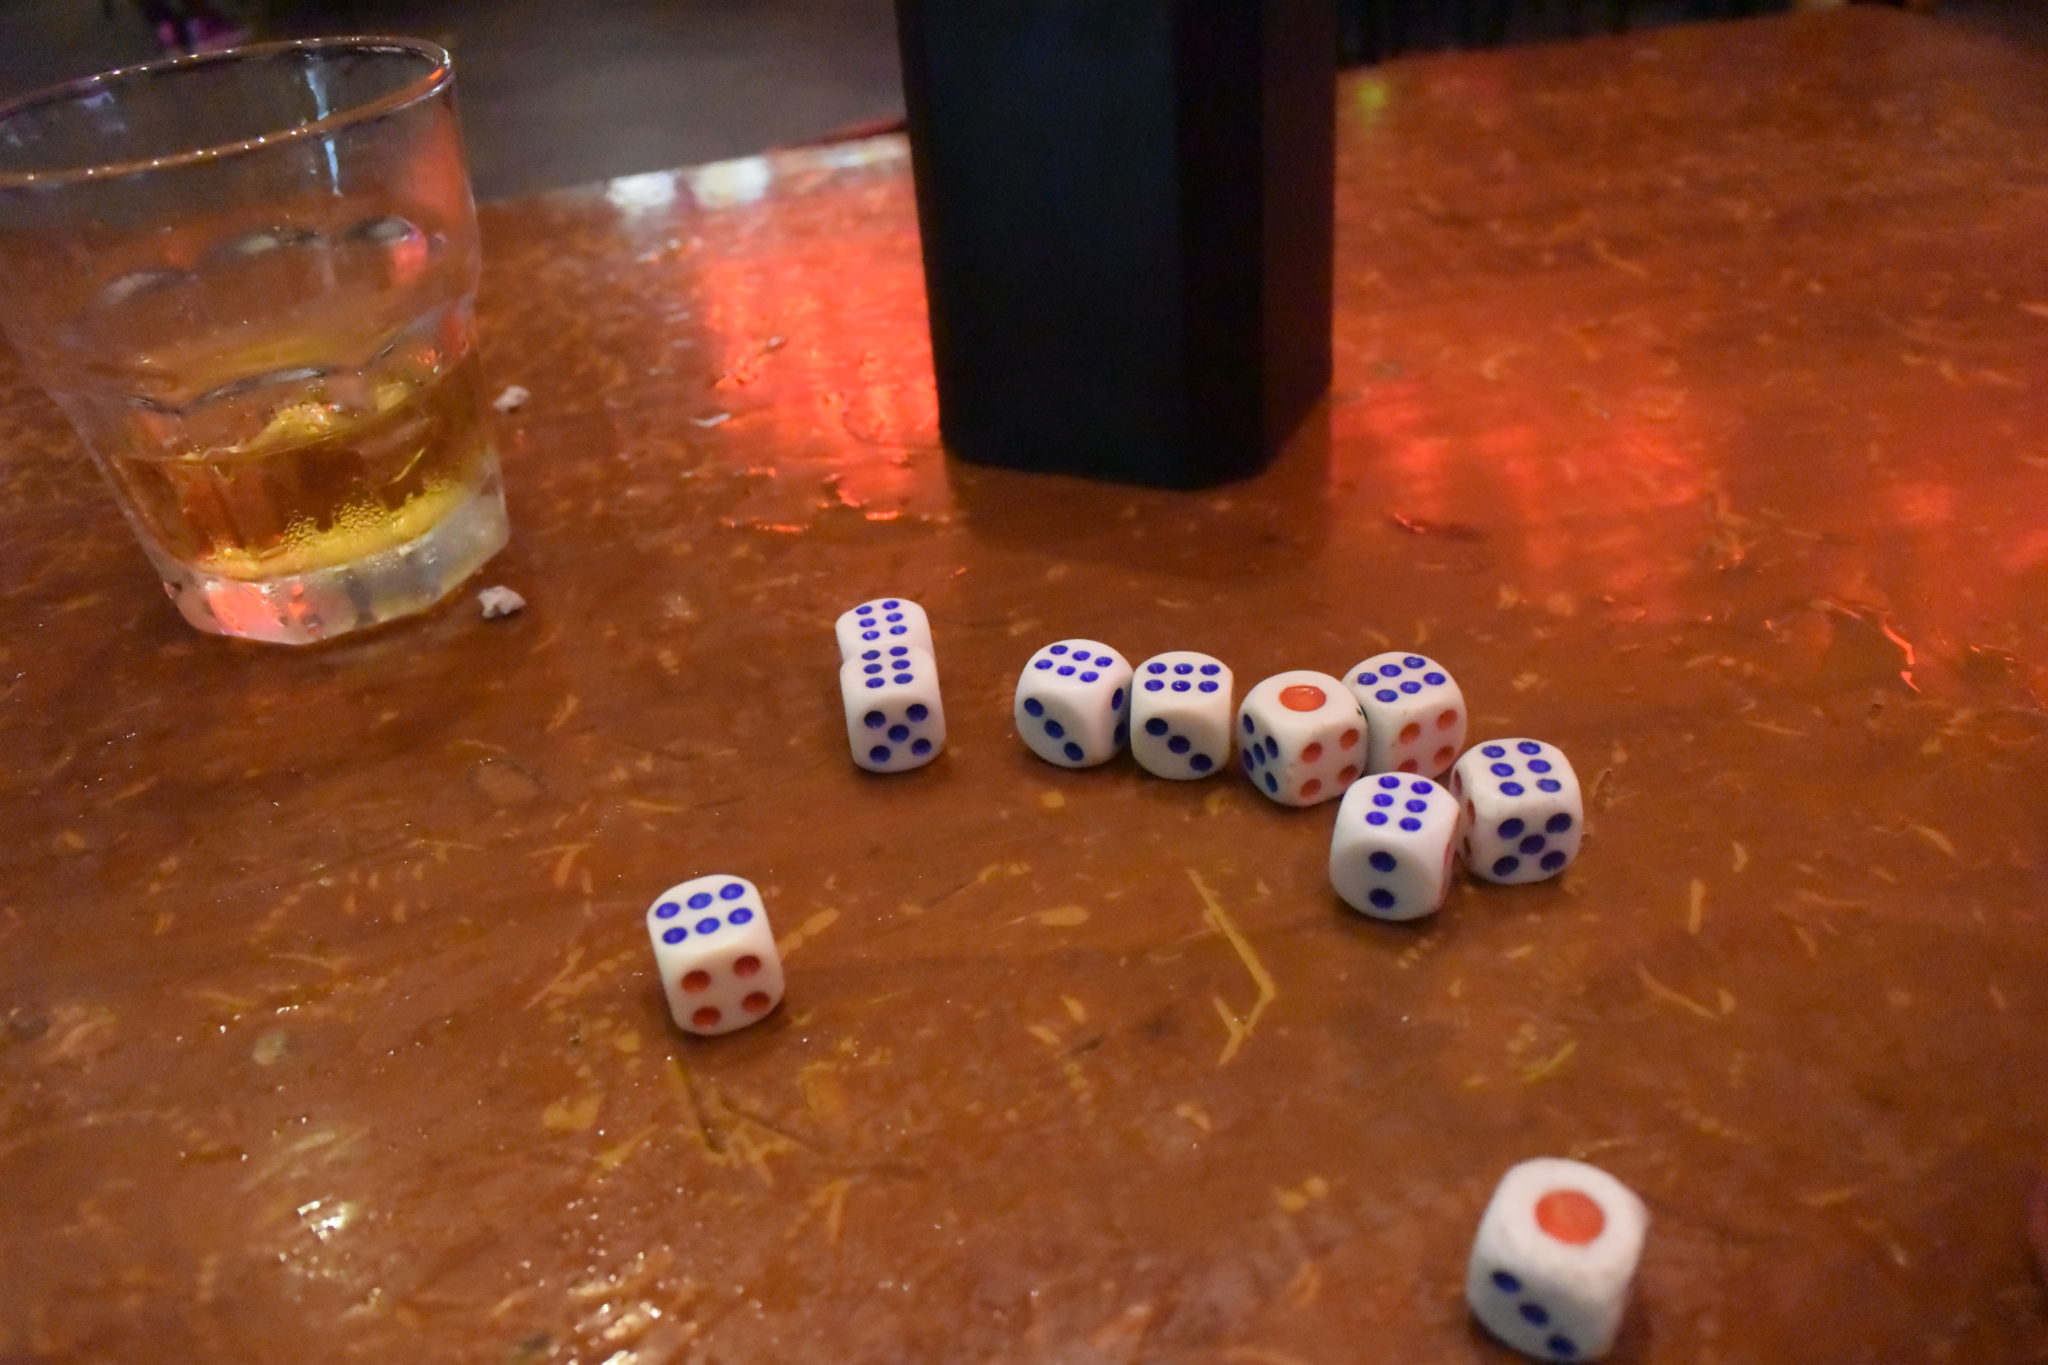 The evil dice 